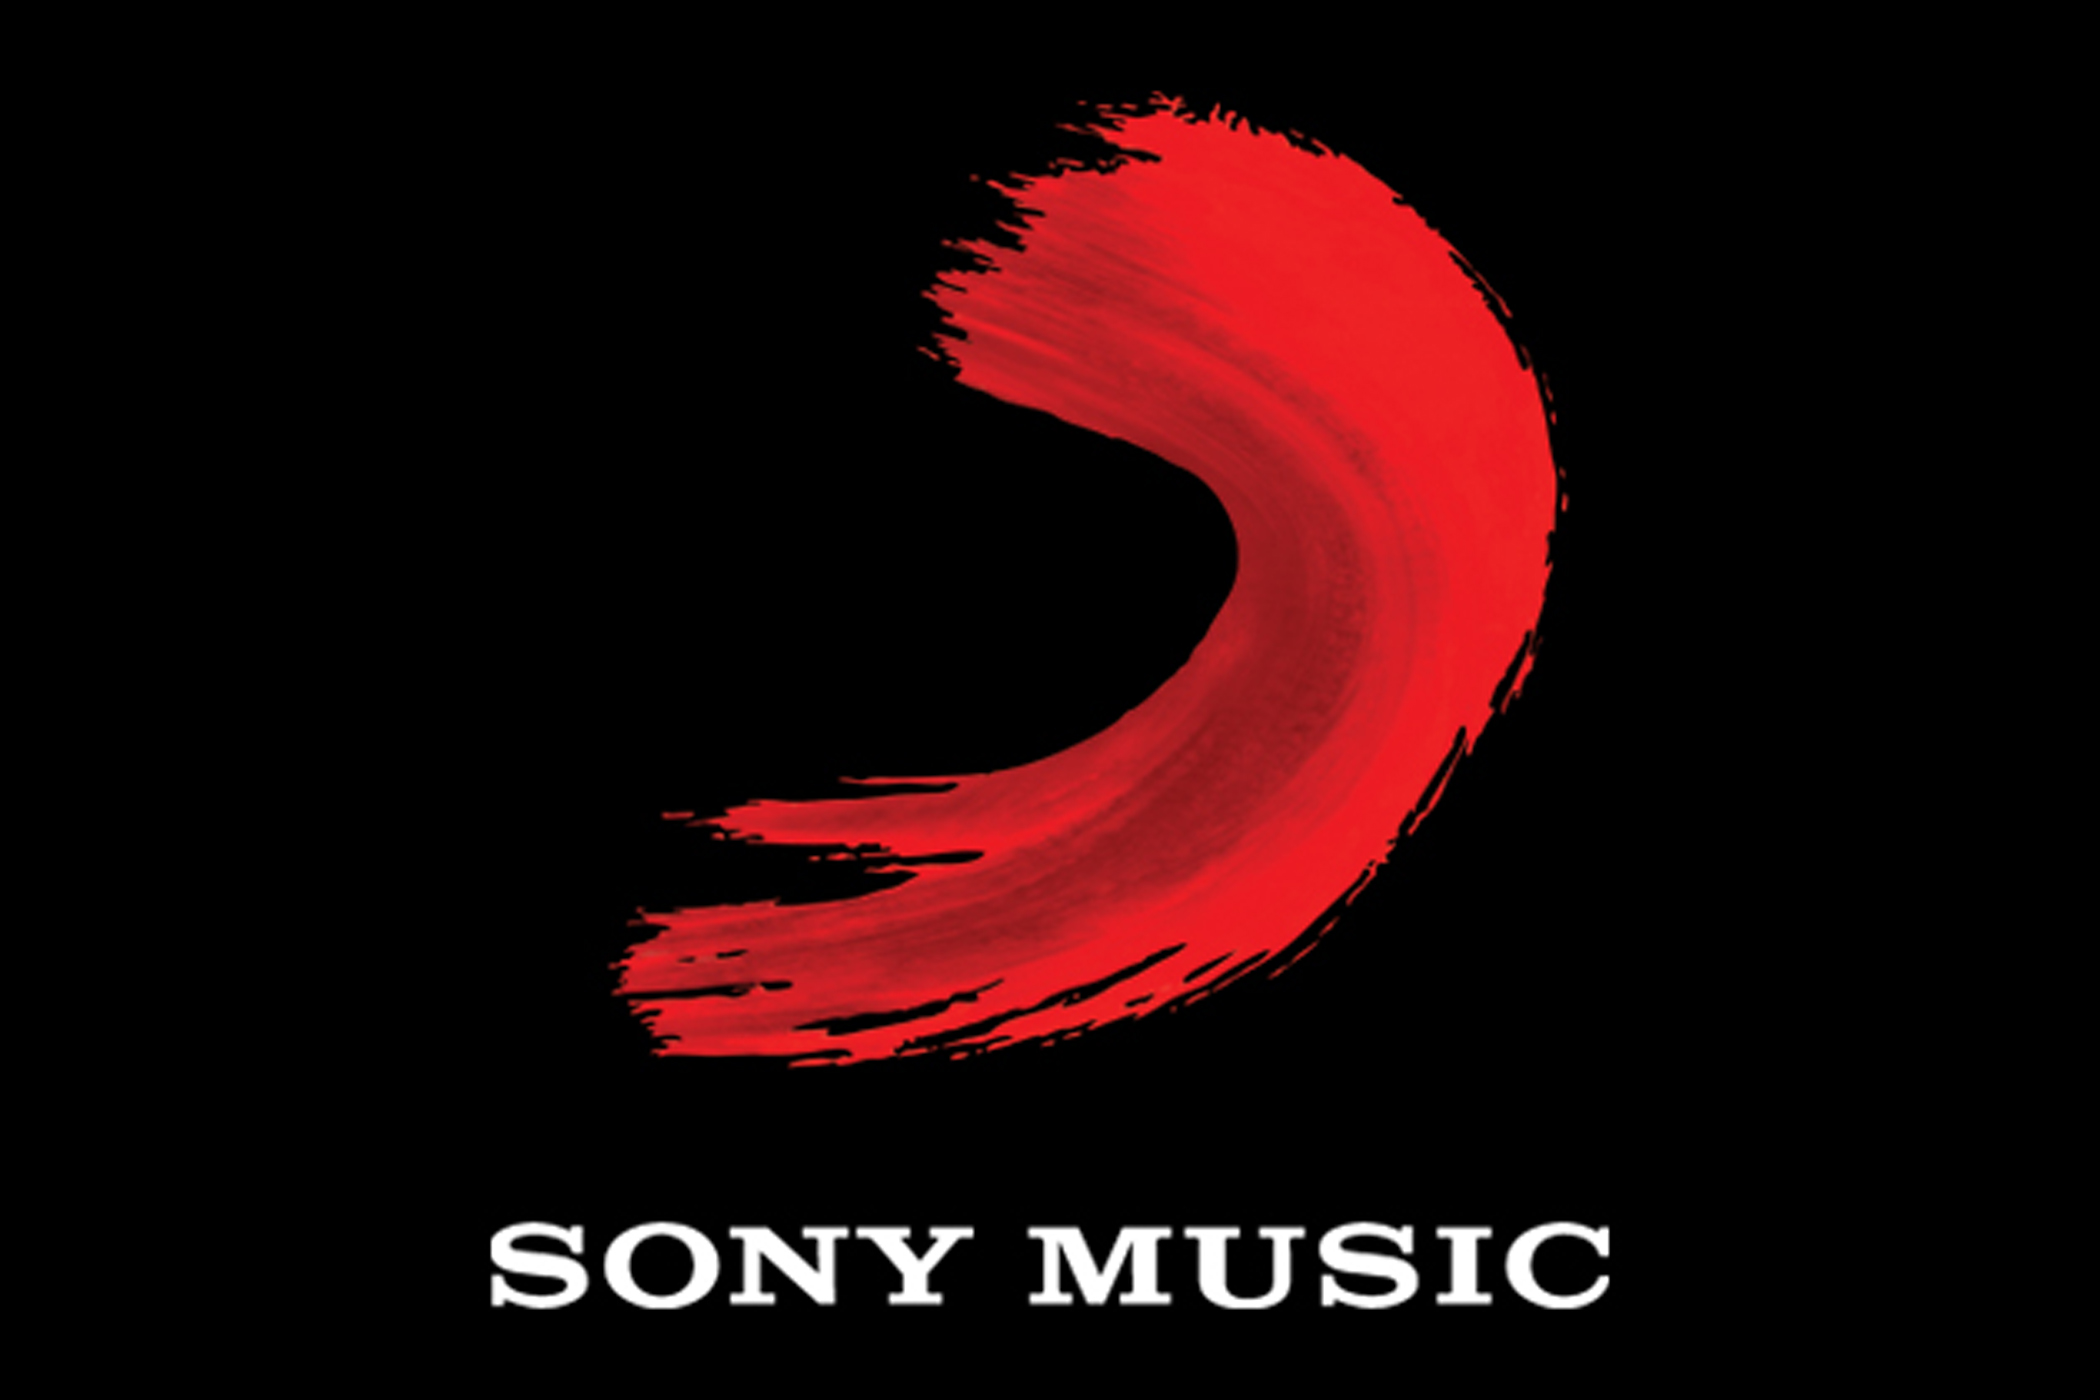 Sony Music e a sua nova era.